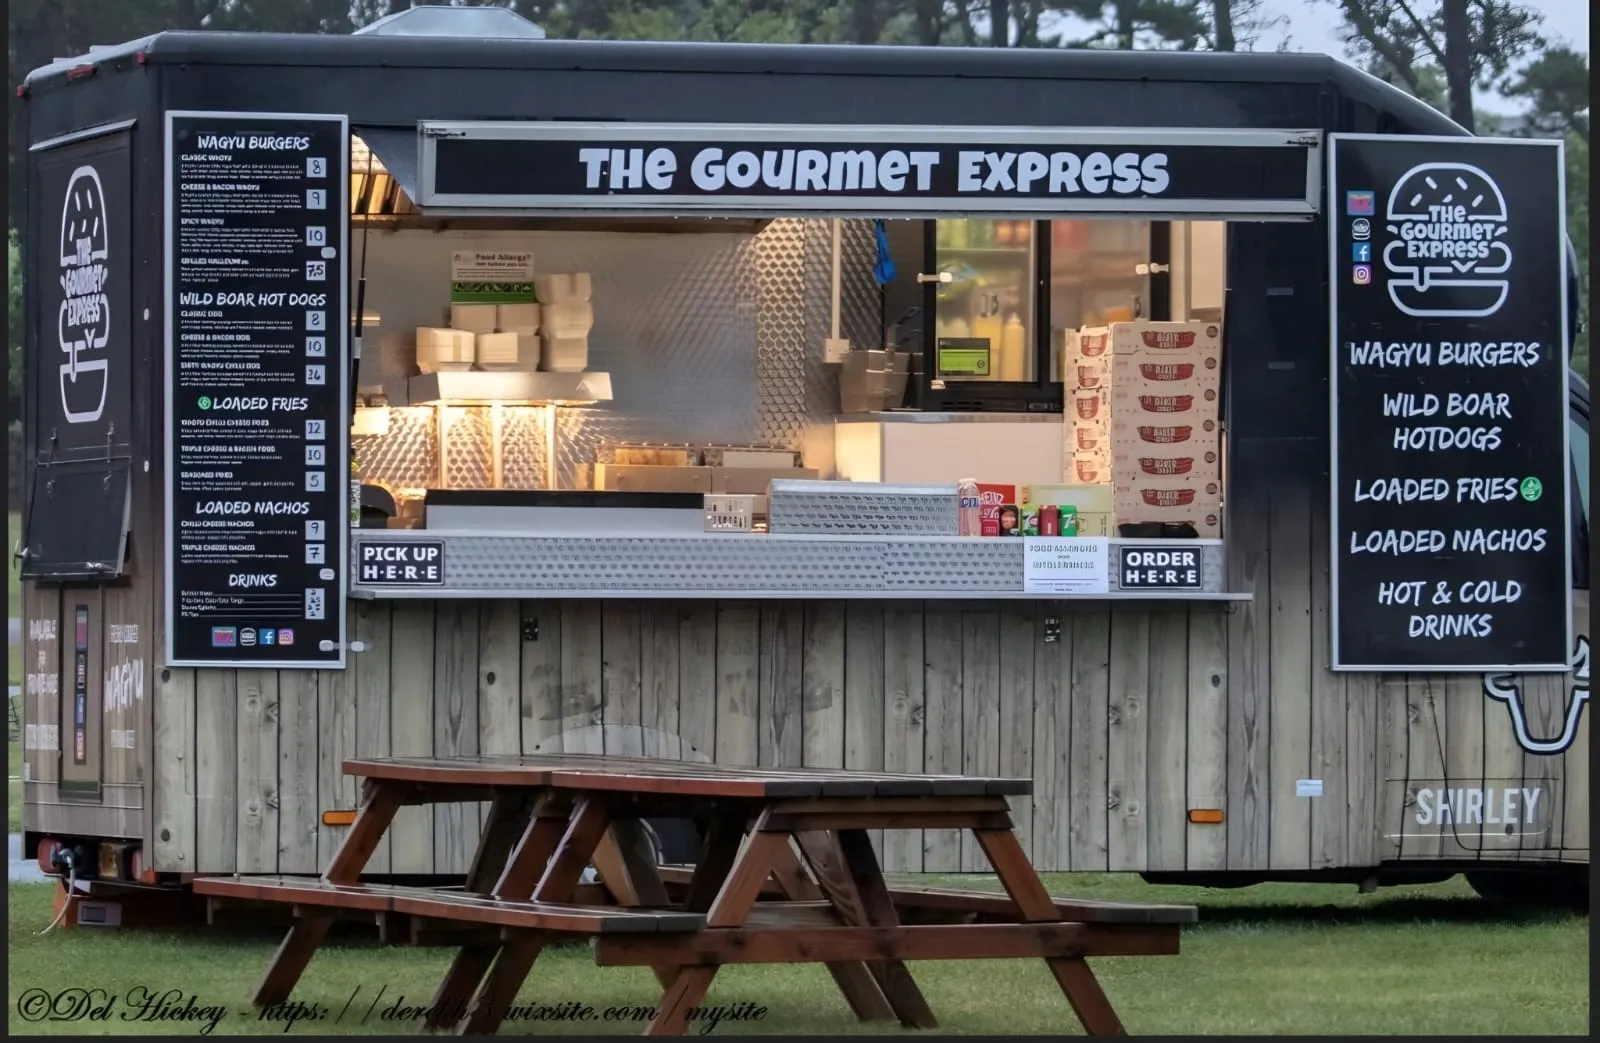 The Gourmet Express Van